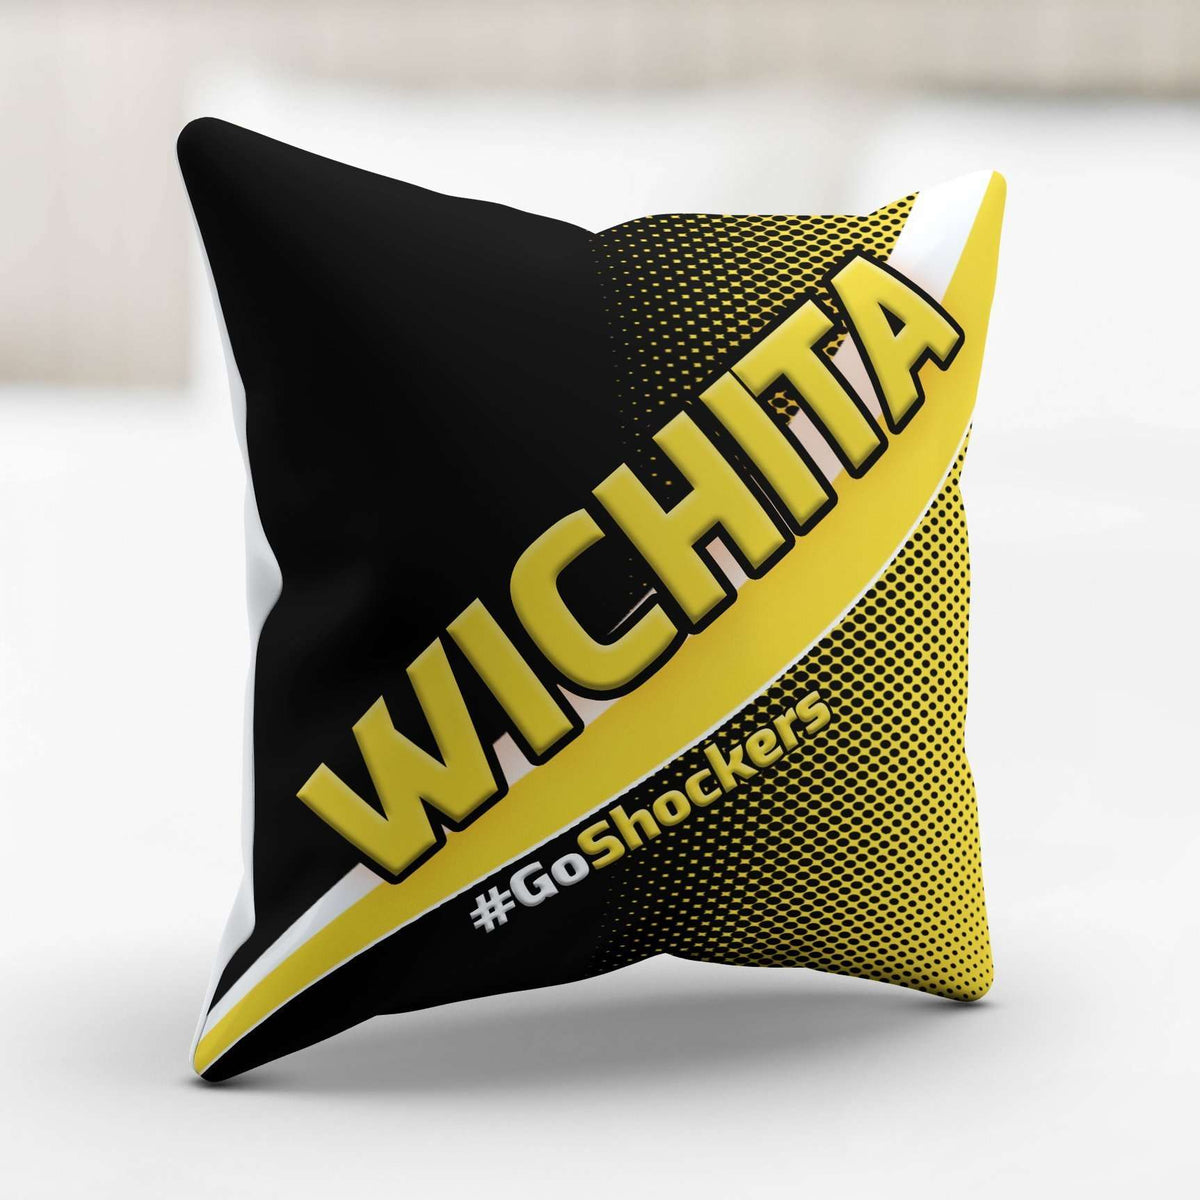 Designs by MyUtopia Shout Out:#GoShockers Wichita Pillowcase